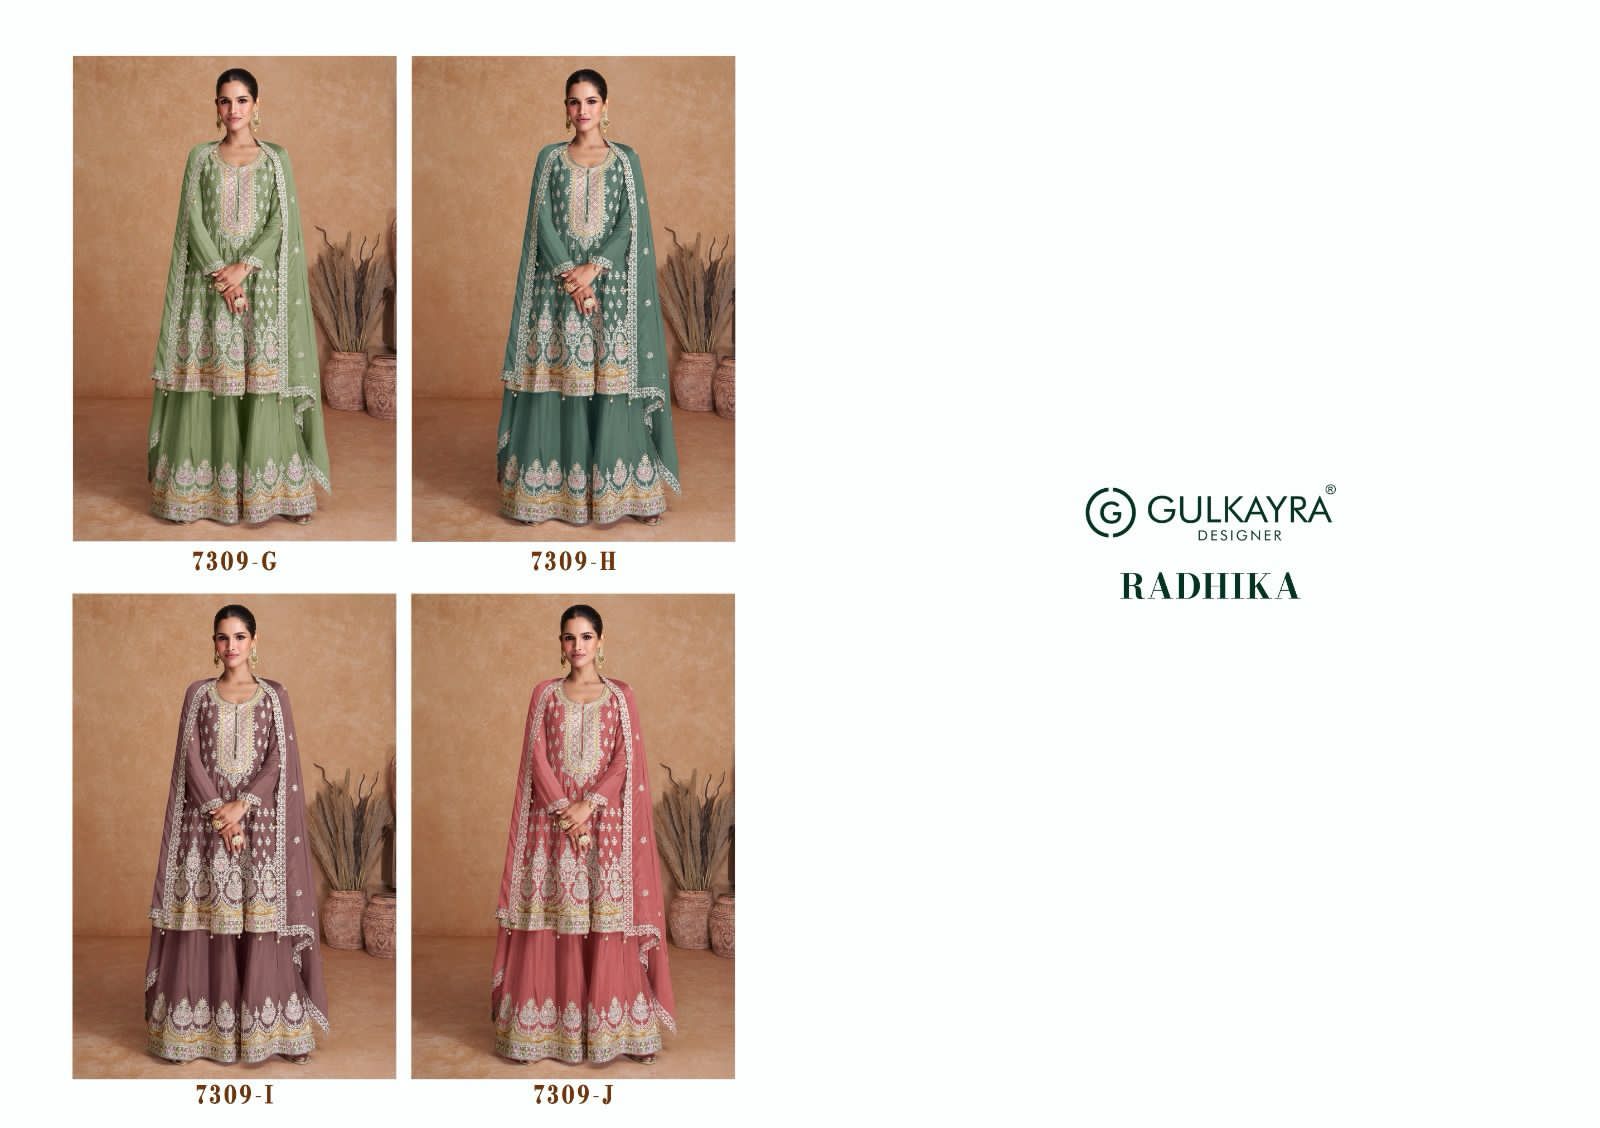 Gulkayra Radhika collection 2